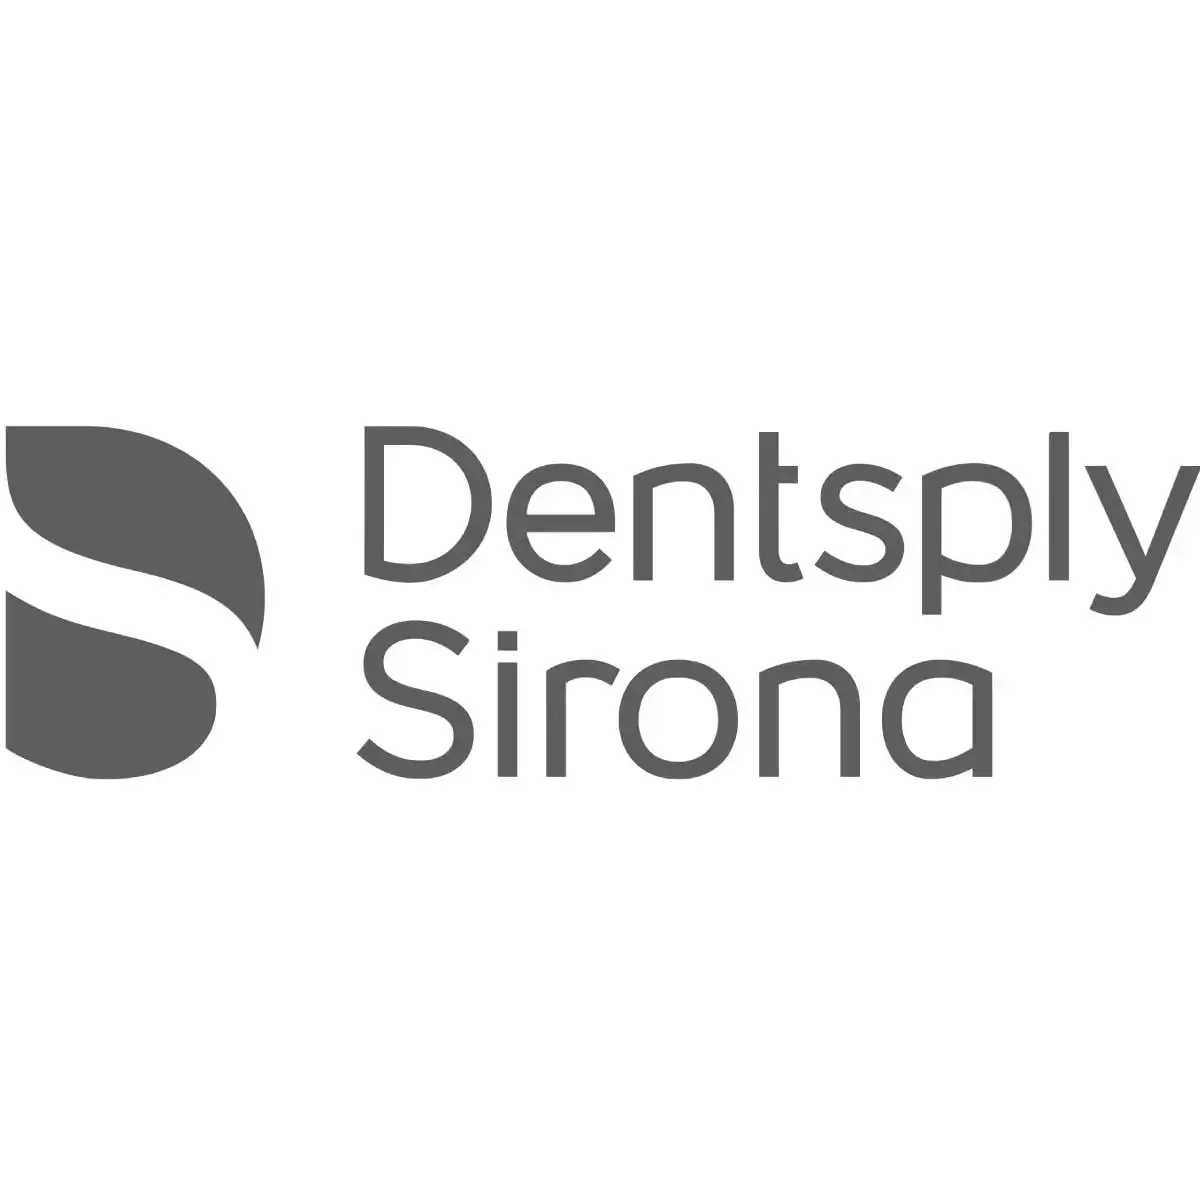 En İyi İmplant Markaları Dentsply Sirona